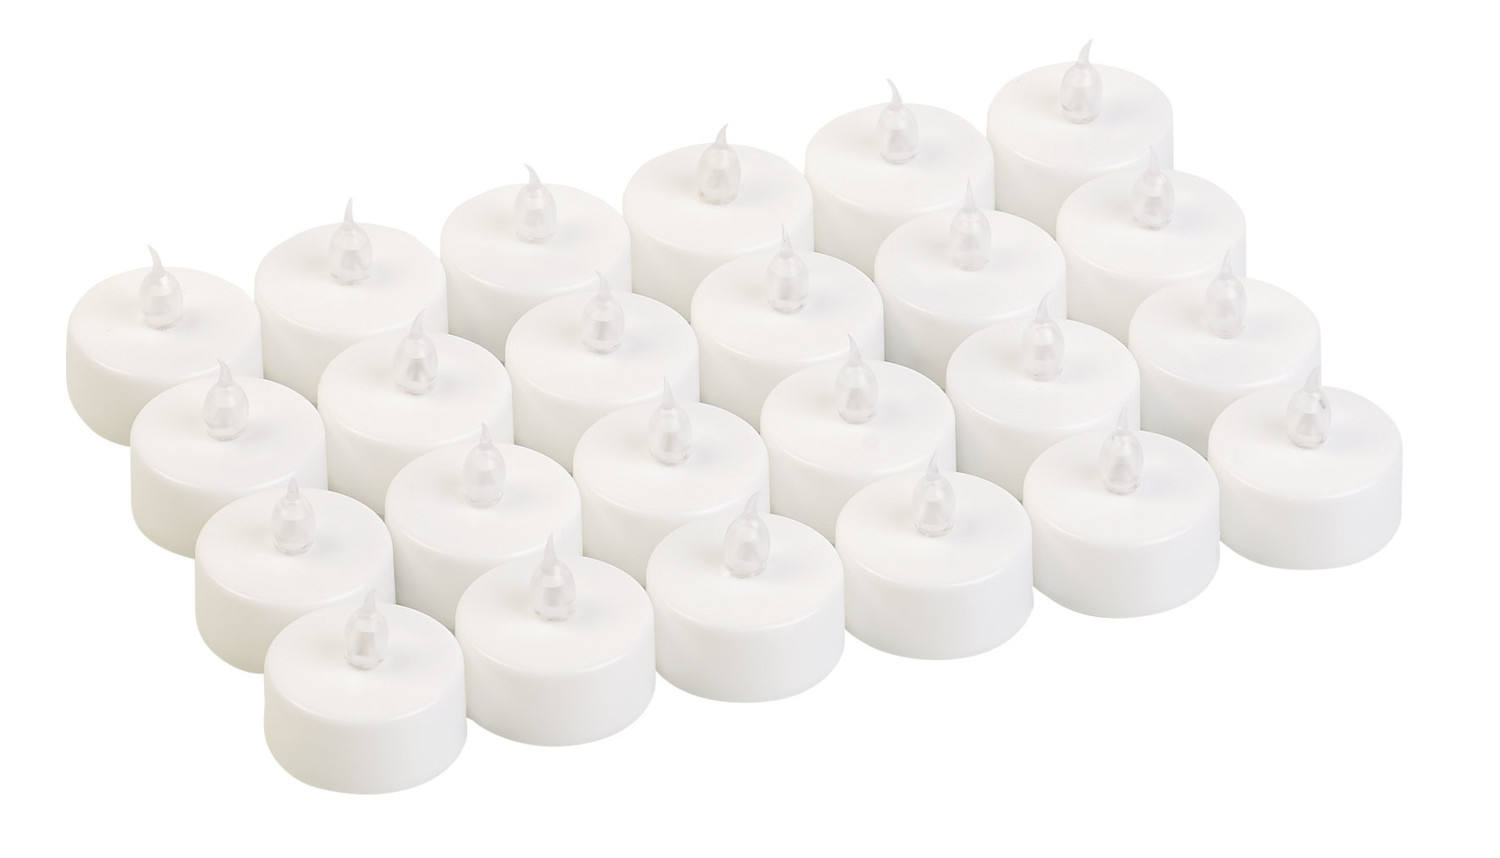 24 bougies plates à LED, Bougeoirs et bougies à LED